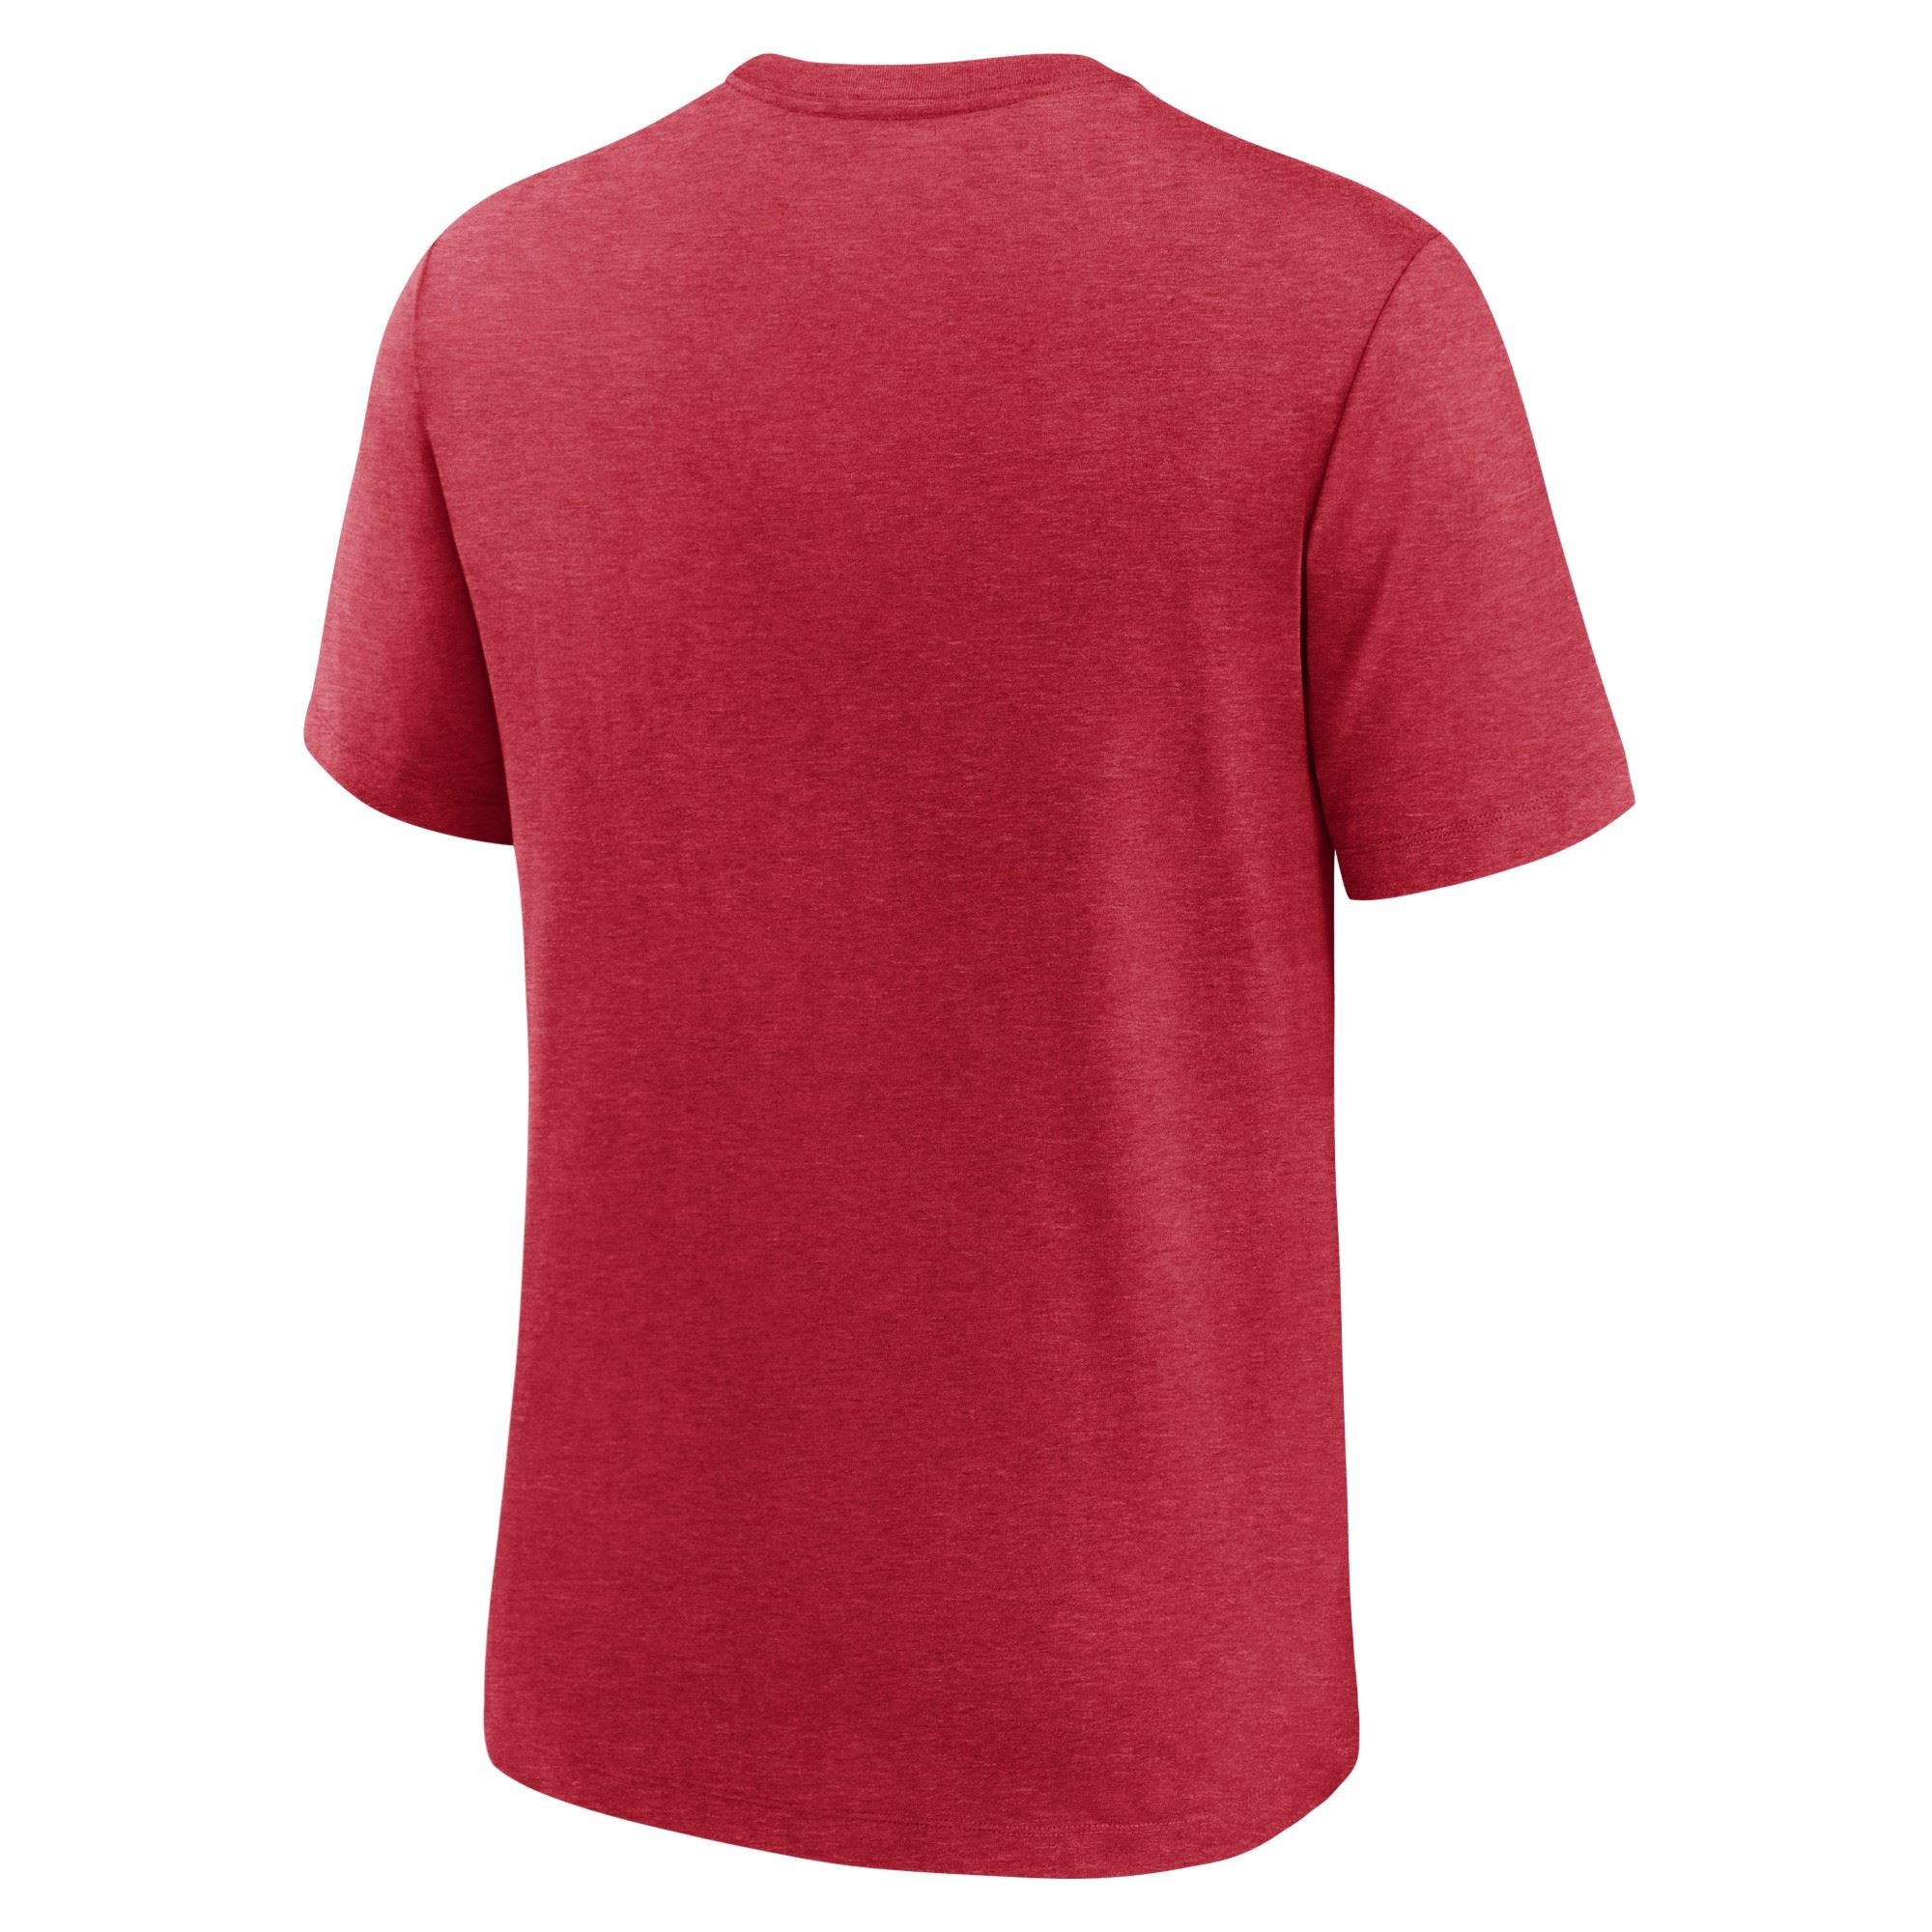 Tampa Bay Buccaneers NFL Triblend Team Name Fashion Red Heather T-Shirt Nike